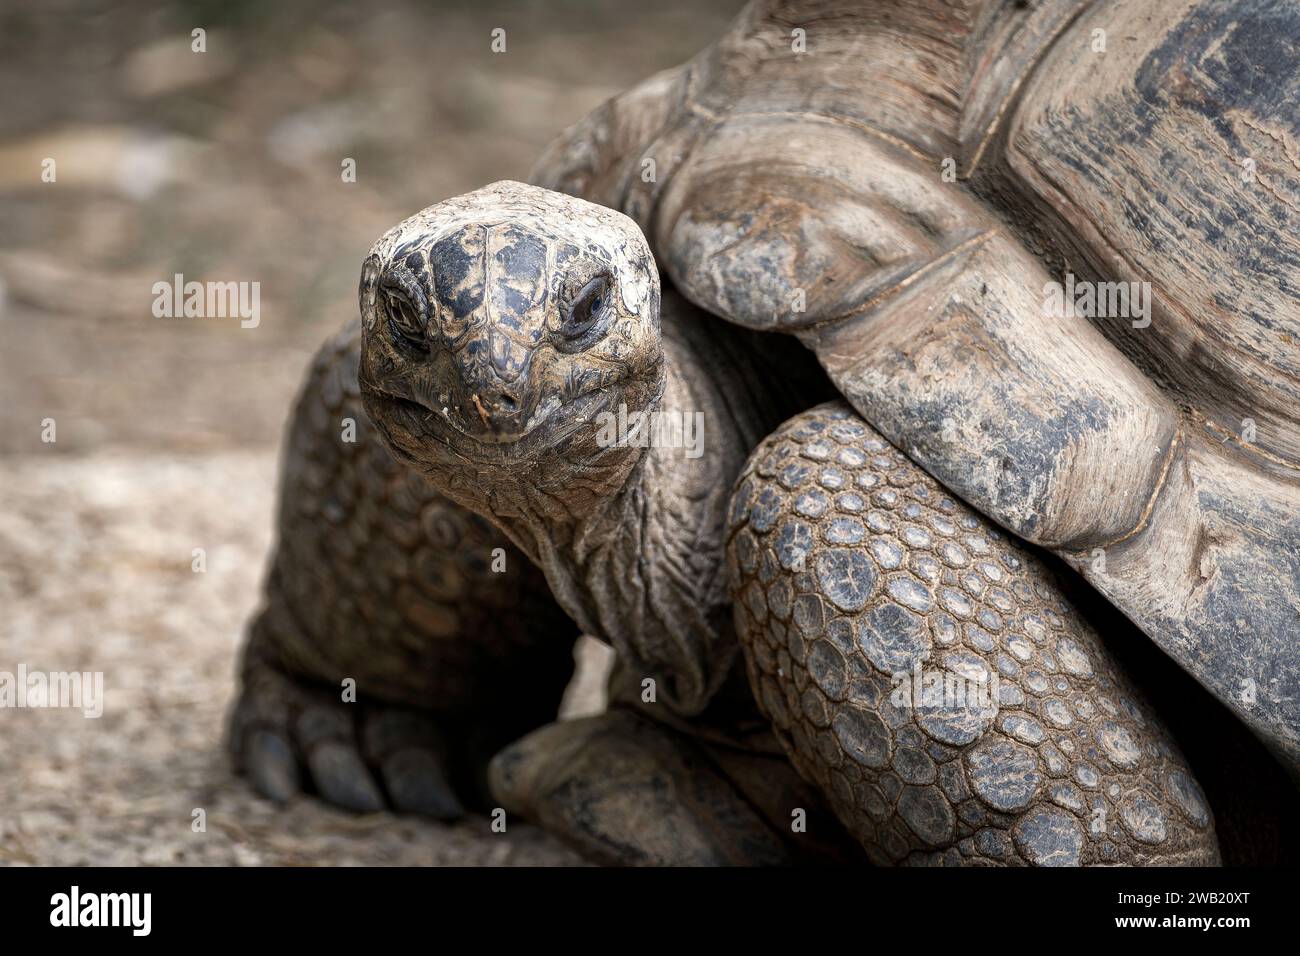 Portrait de tortue géante qui regarde Stockfoto